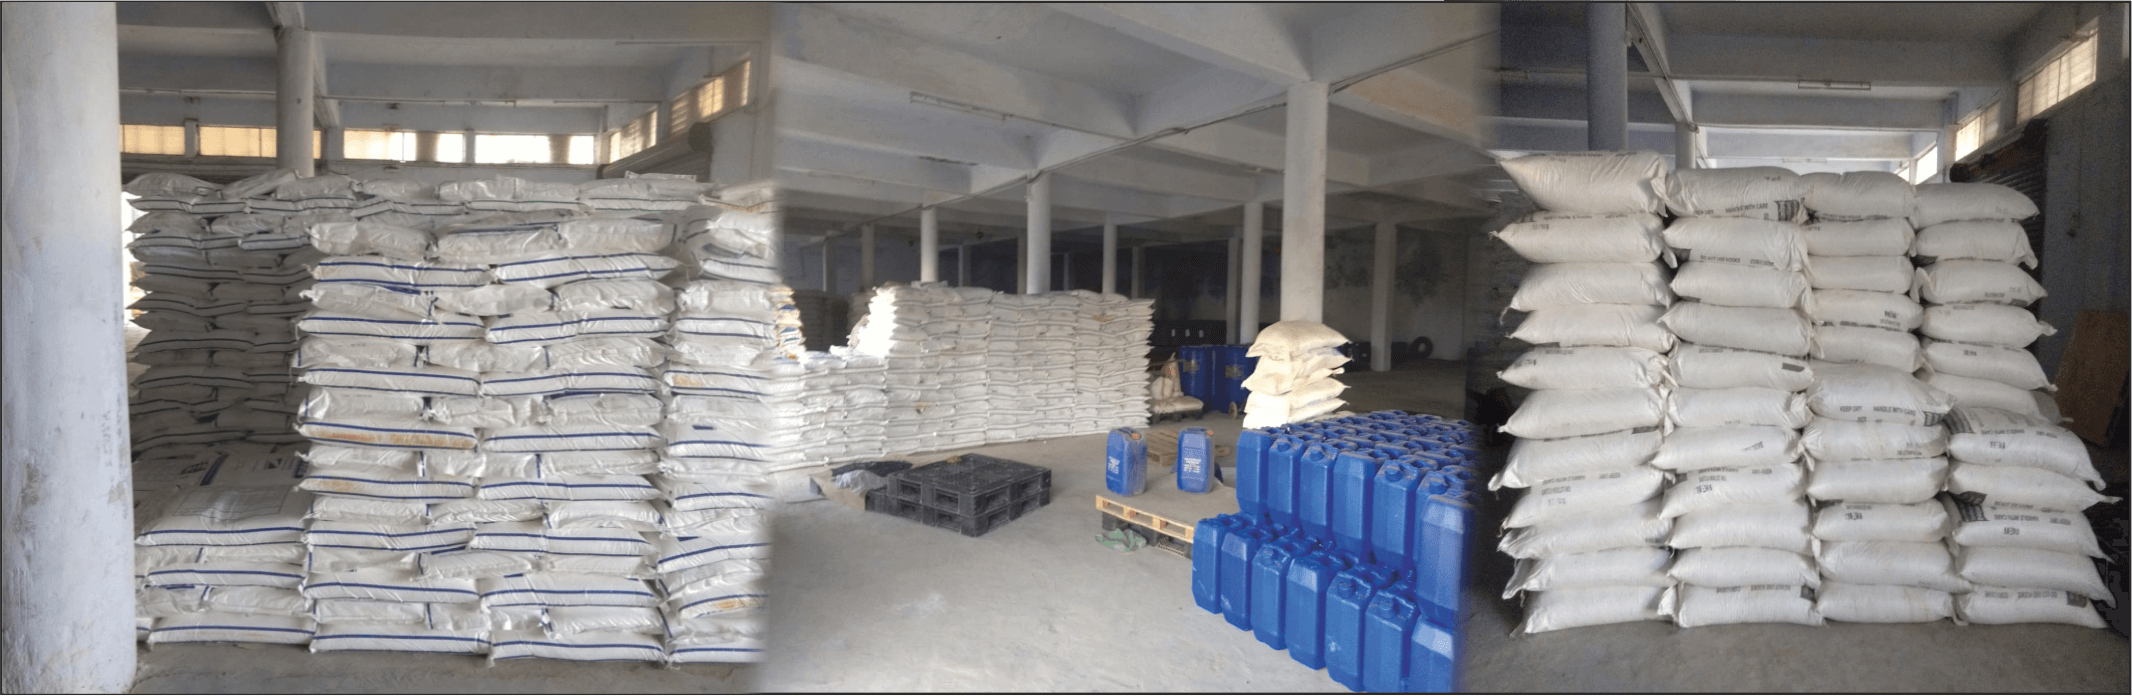 prakash chemicals agencies Ahmedabad office and warehouse images